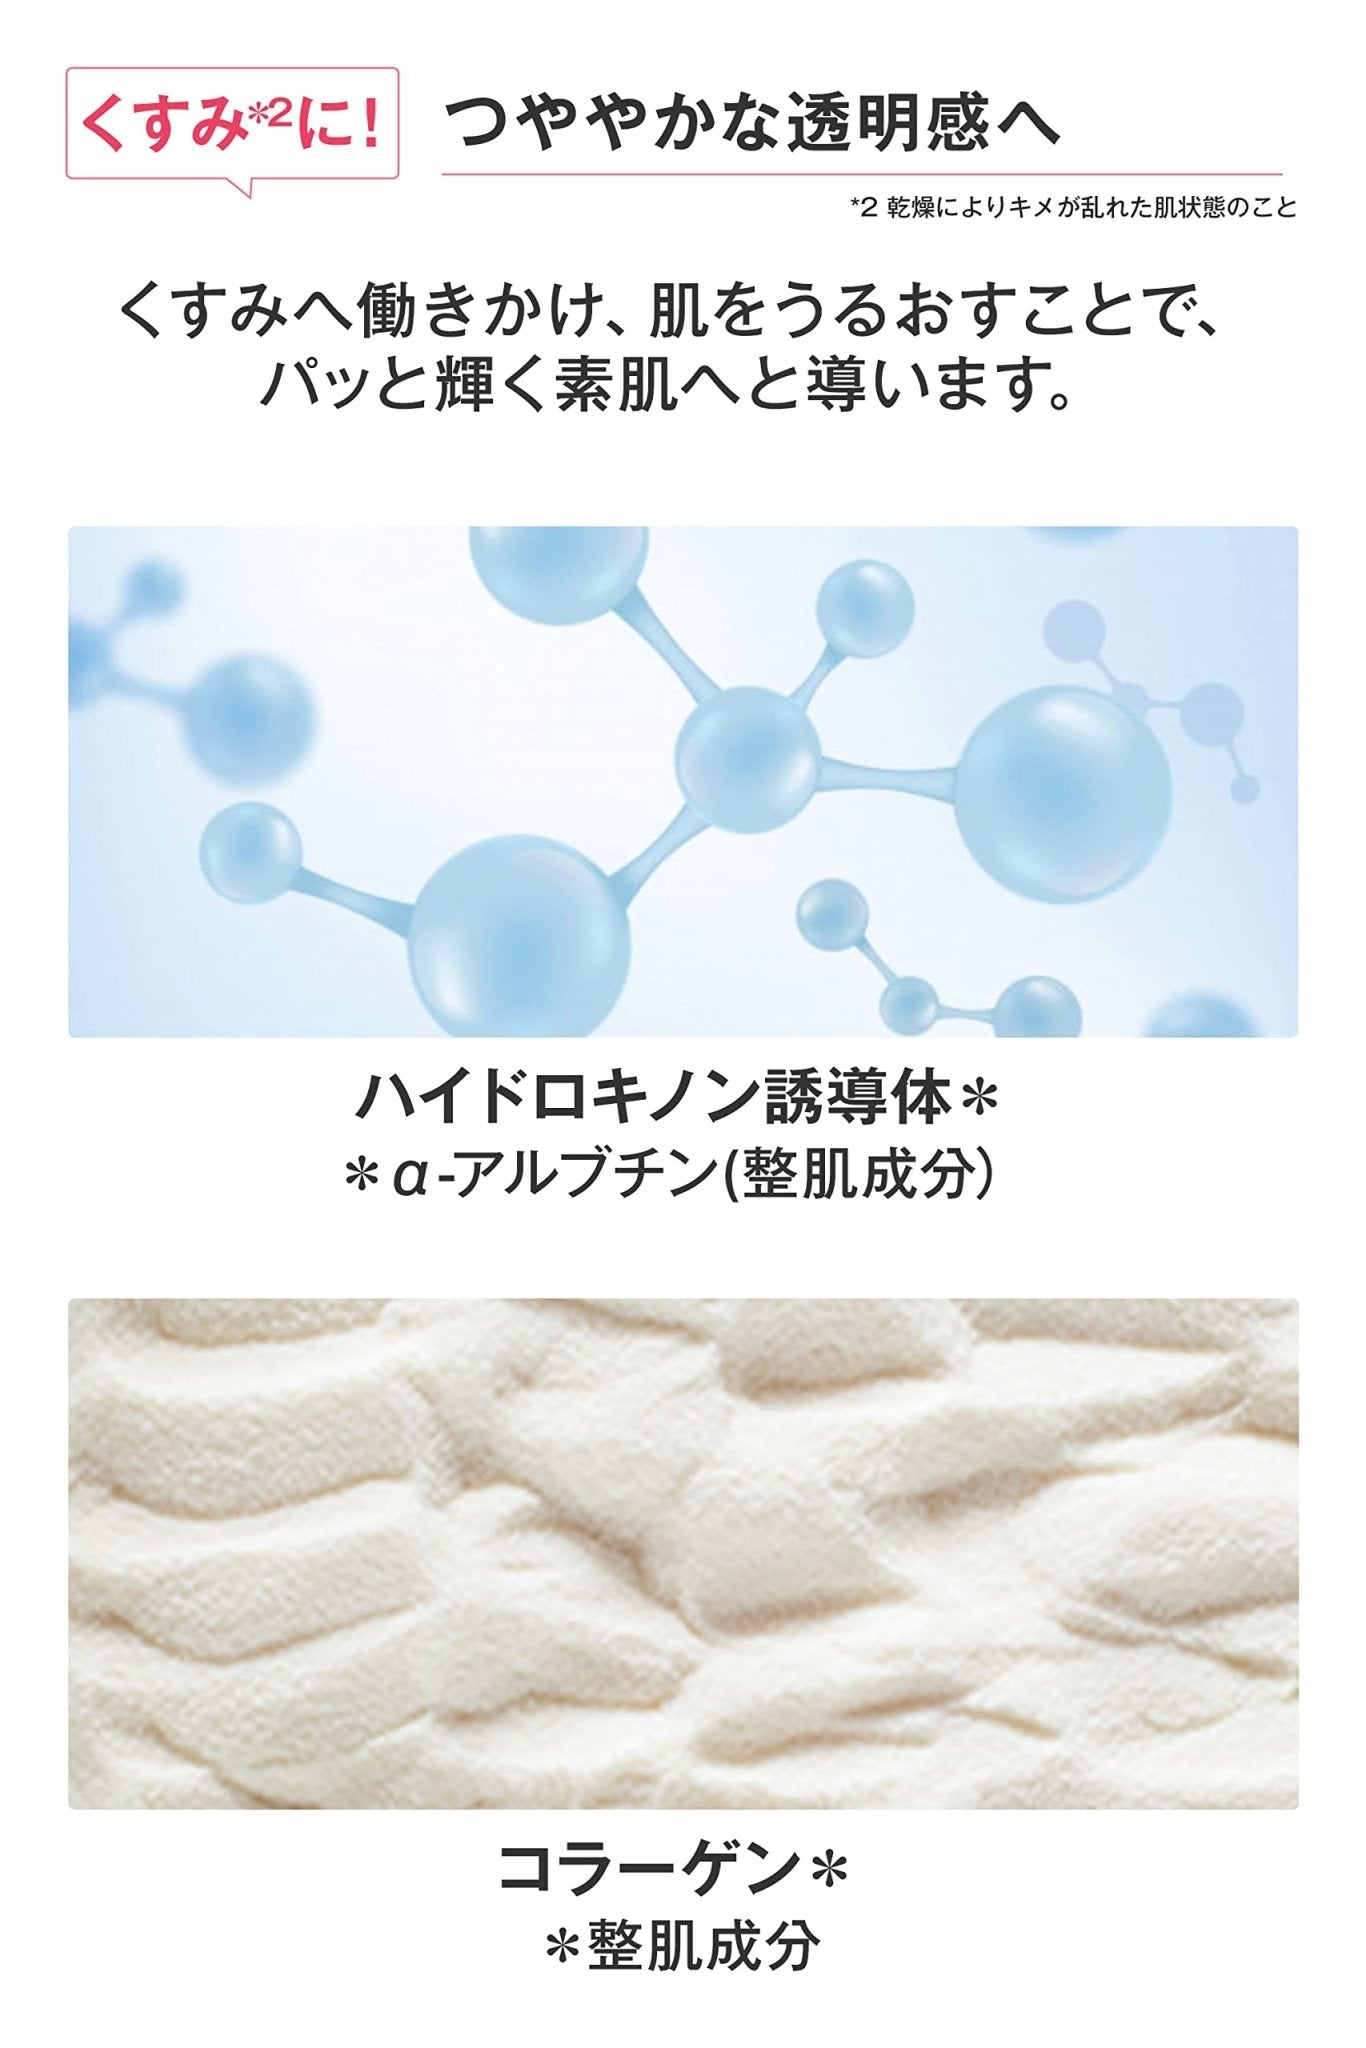 Cosmetex Roland Biyougeneki Premium Super Moist Skin Lotion Hc 185ml - Japanese Lotion For Dry Skin - YOYO JAPAN